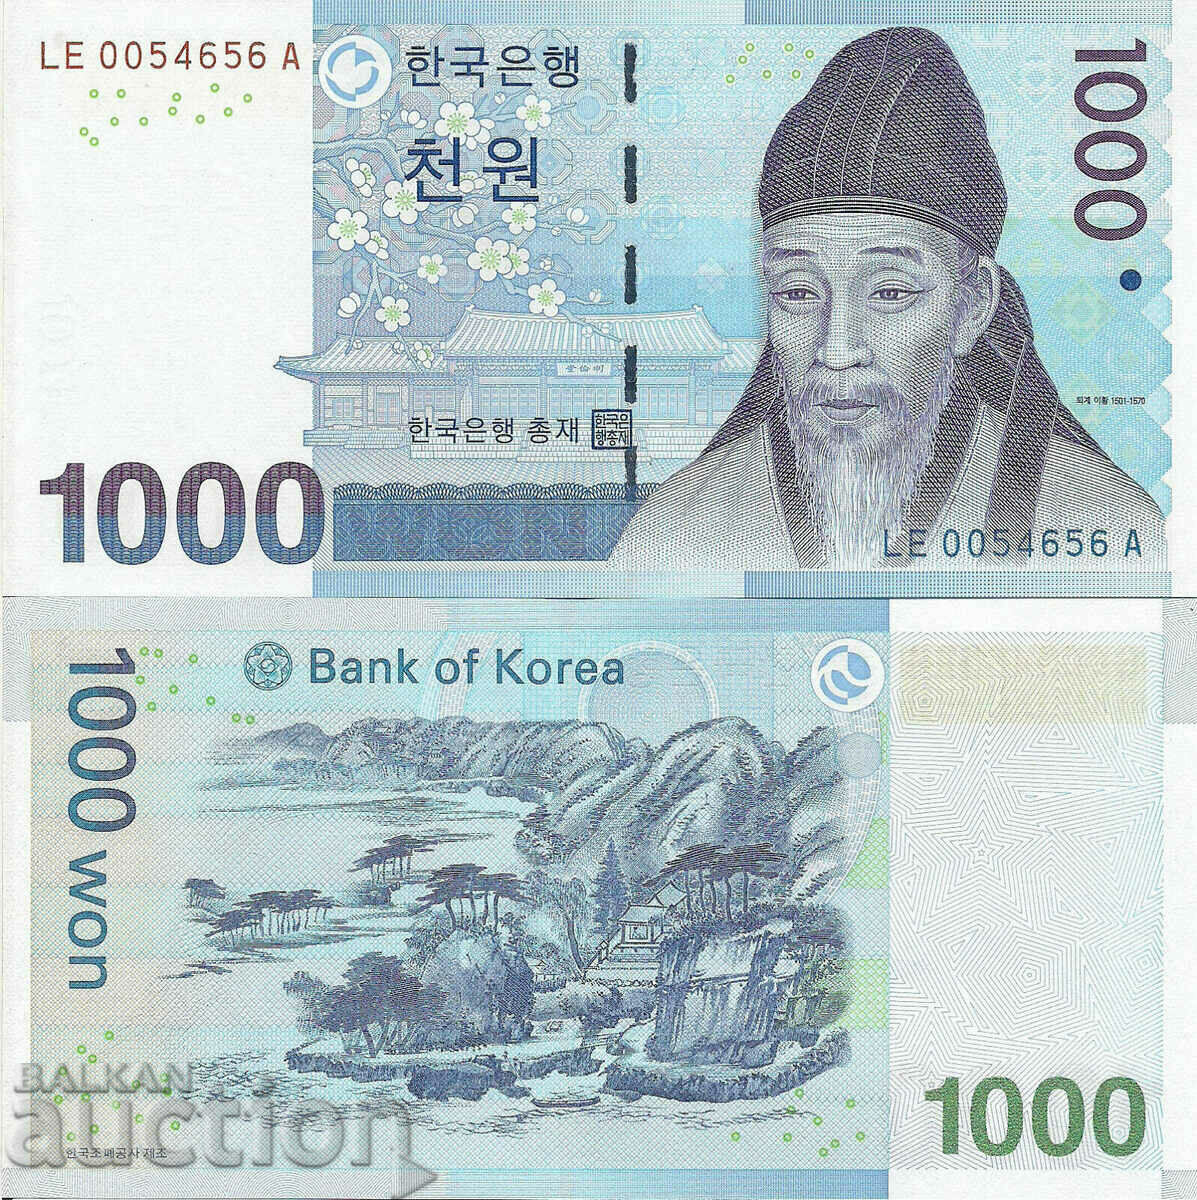 SOUTH KOREA, 1000 won, 2007, UNC